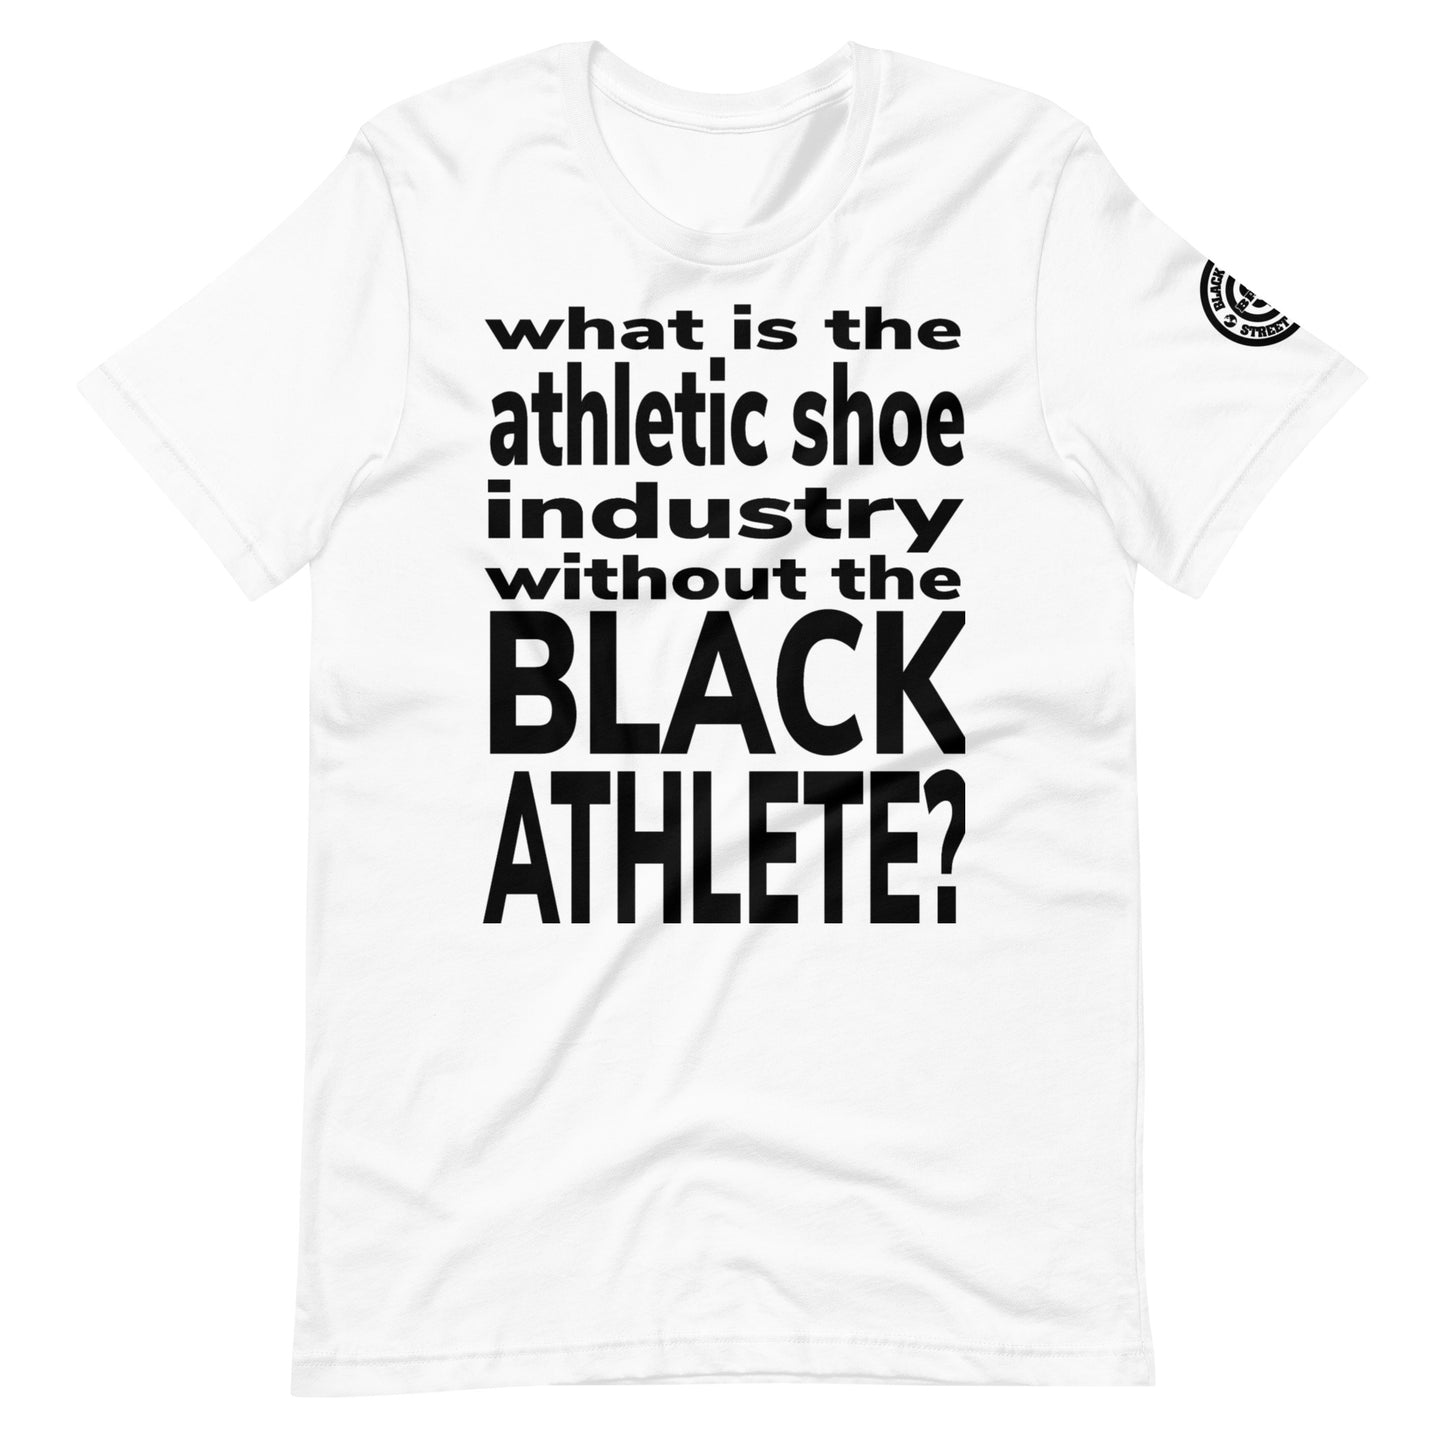 Black Paper - Black Athlete